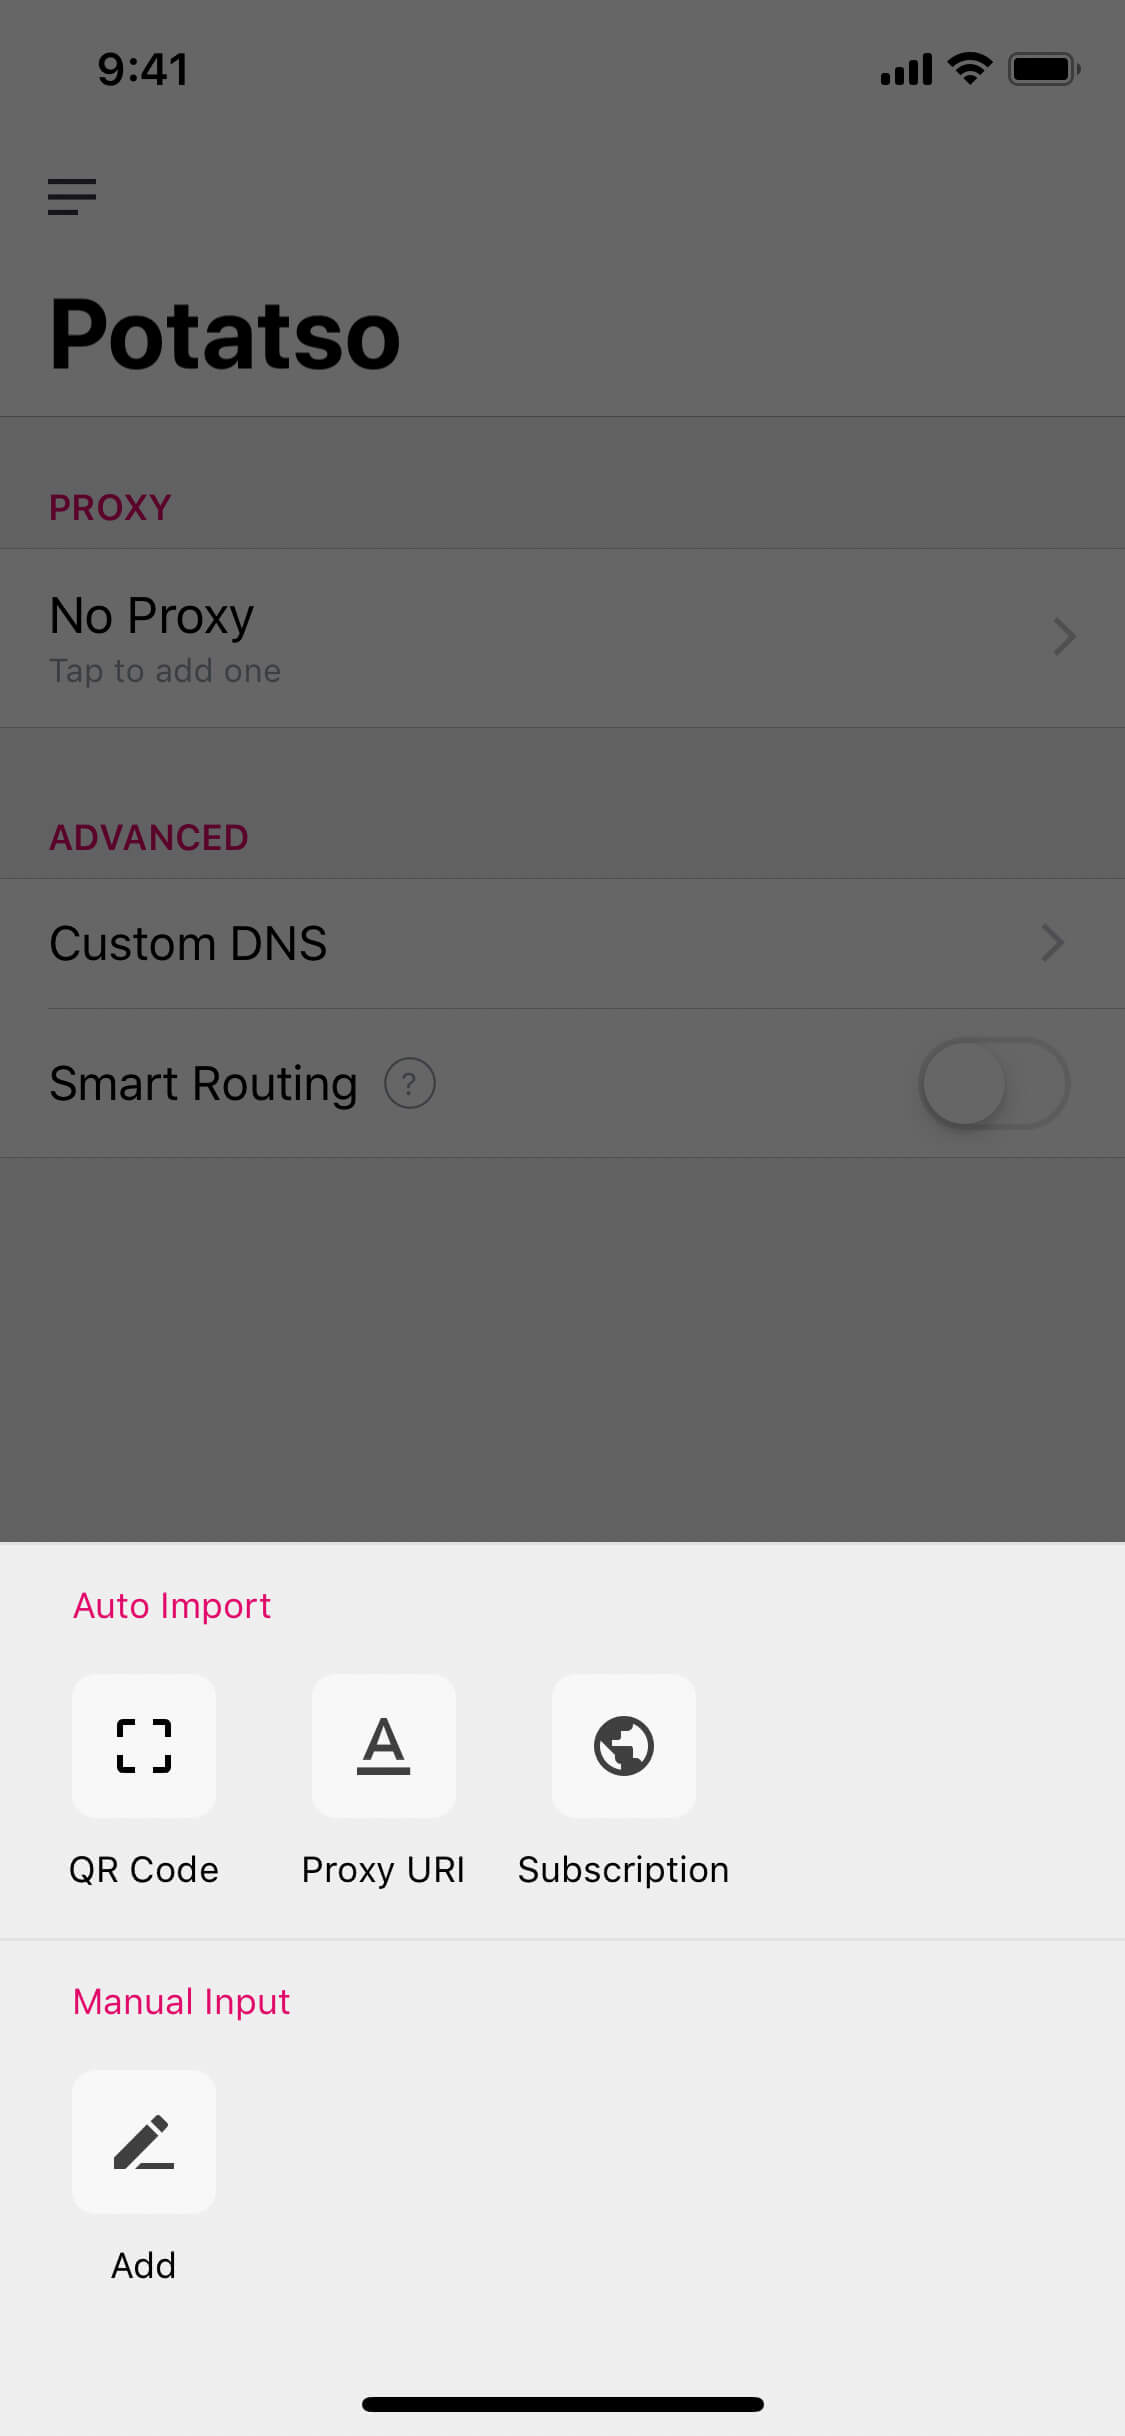 [iOS] 没有美区的Apple ID 下载 Potatso Lite 的超简单办法（ShadowRocket的完美替代）